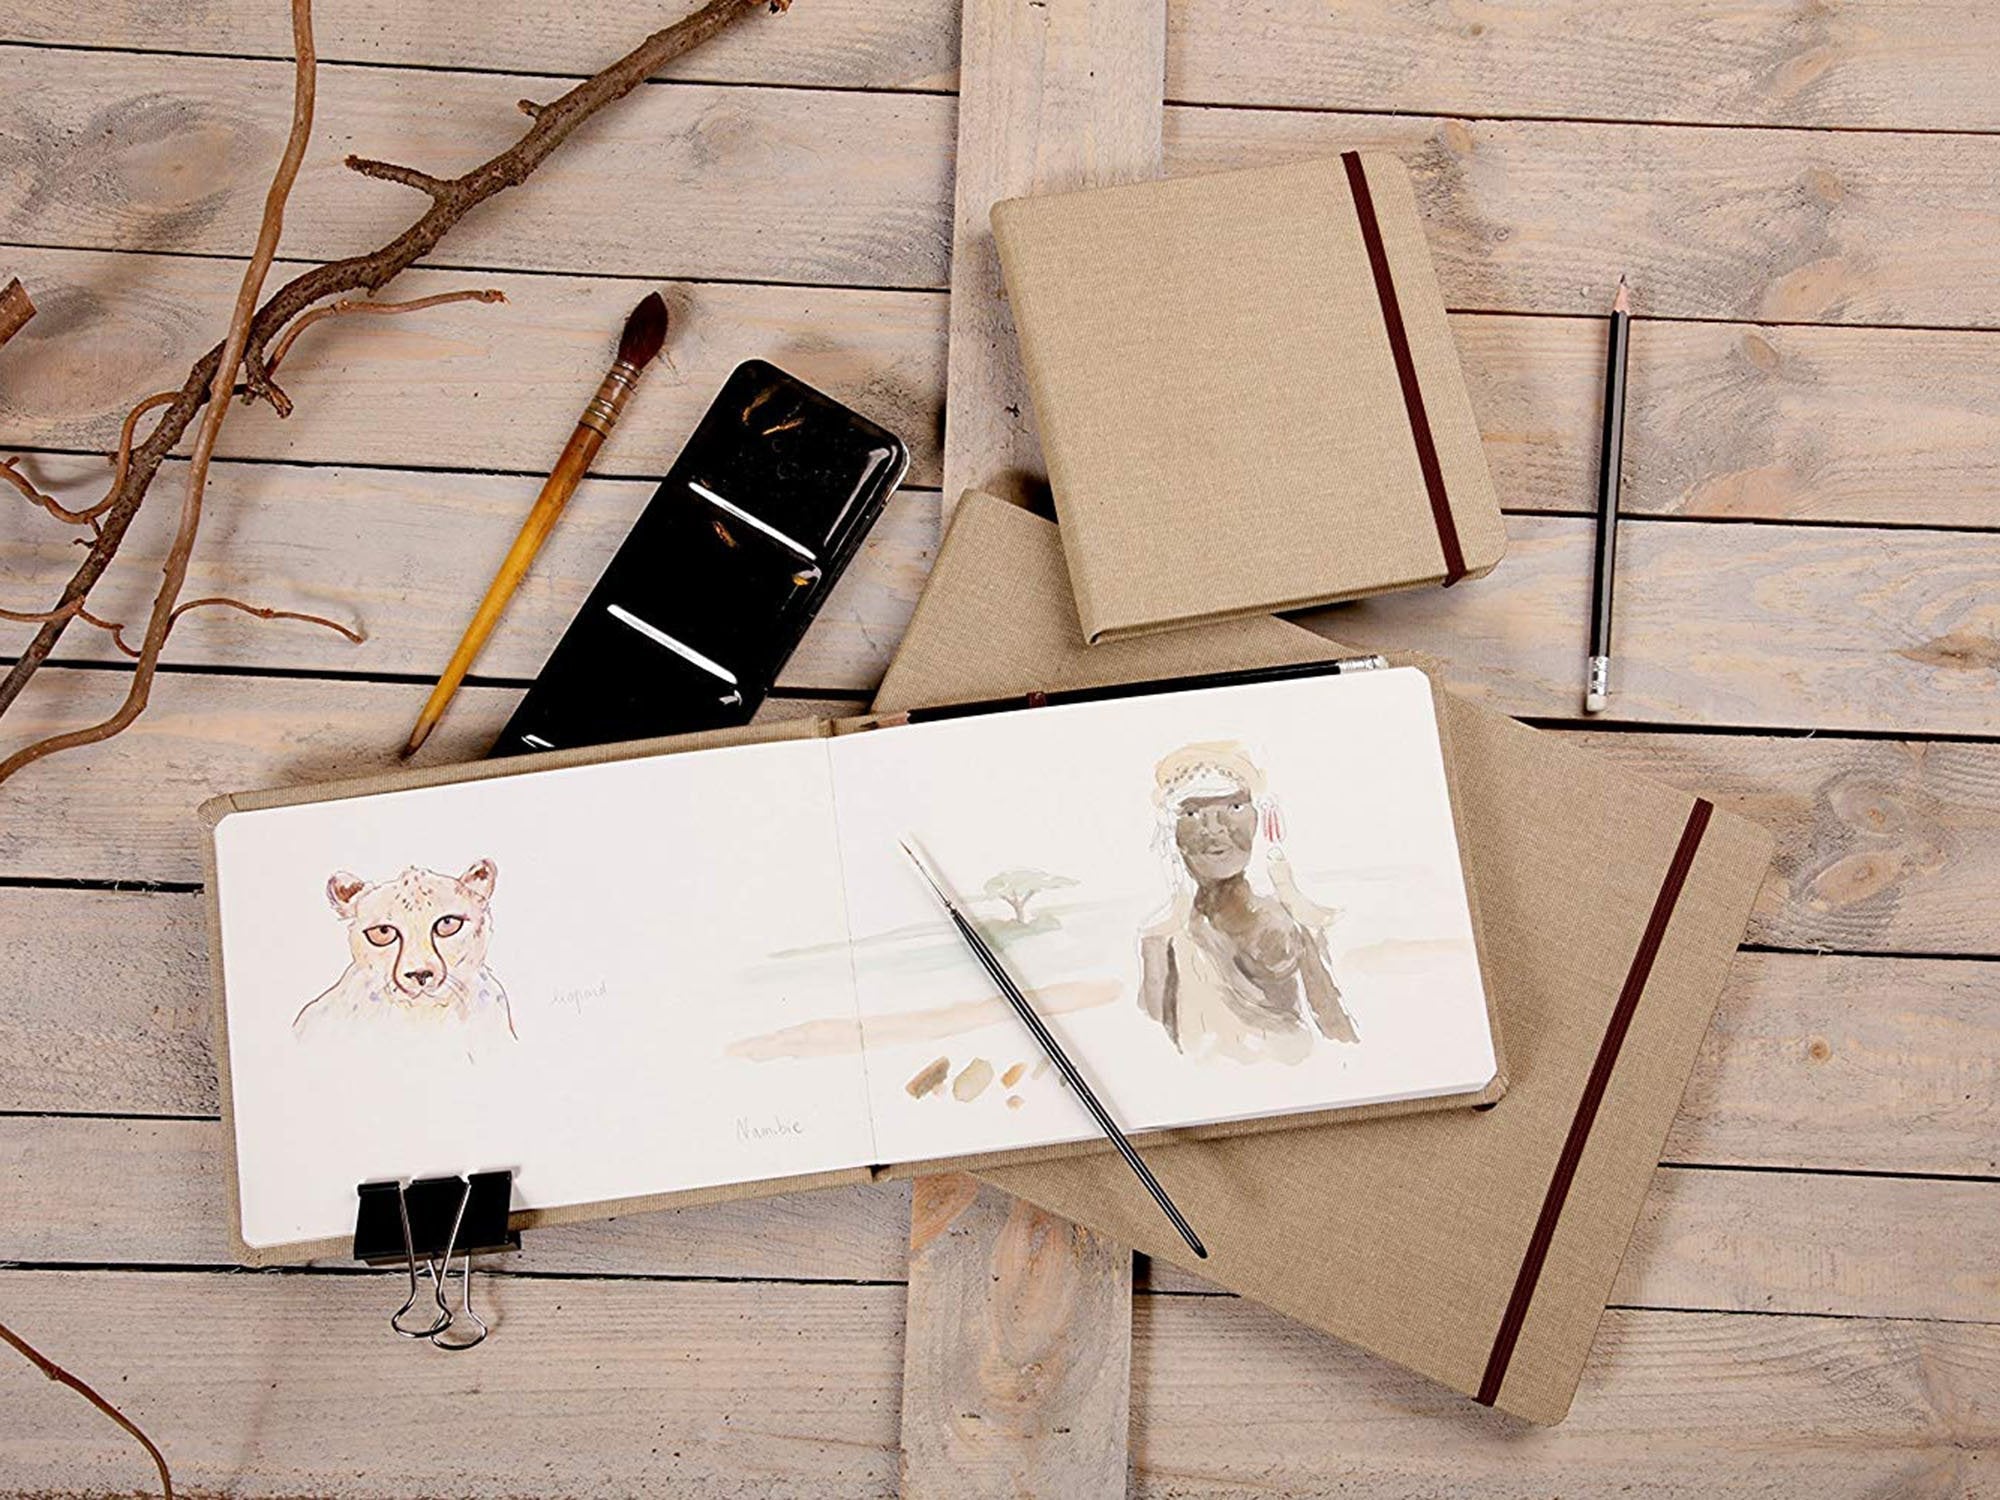 Clairefontaine CrokBook Black Paper Sketchbook – Jenni Bick Custom